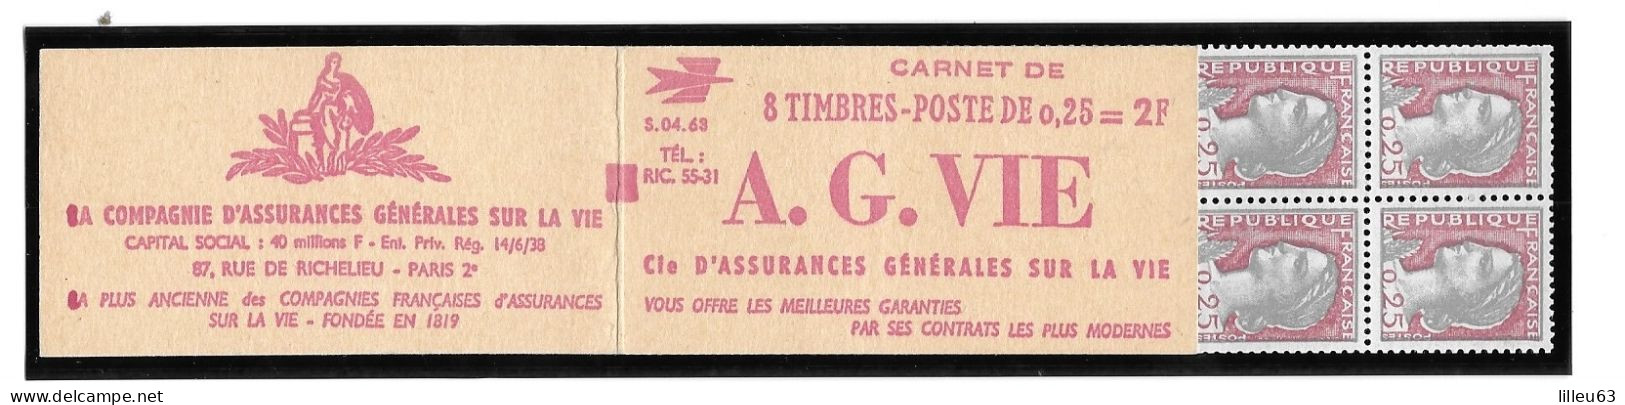 Rare Variete 2 Carnets Marianne Decaris  1263  Carnet 367 Et 367a  Maury  Série 4.63  6mm Au Lieu De 8mm SUP - Modern : 1959-...